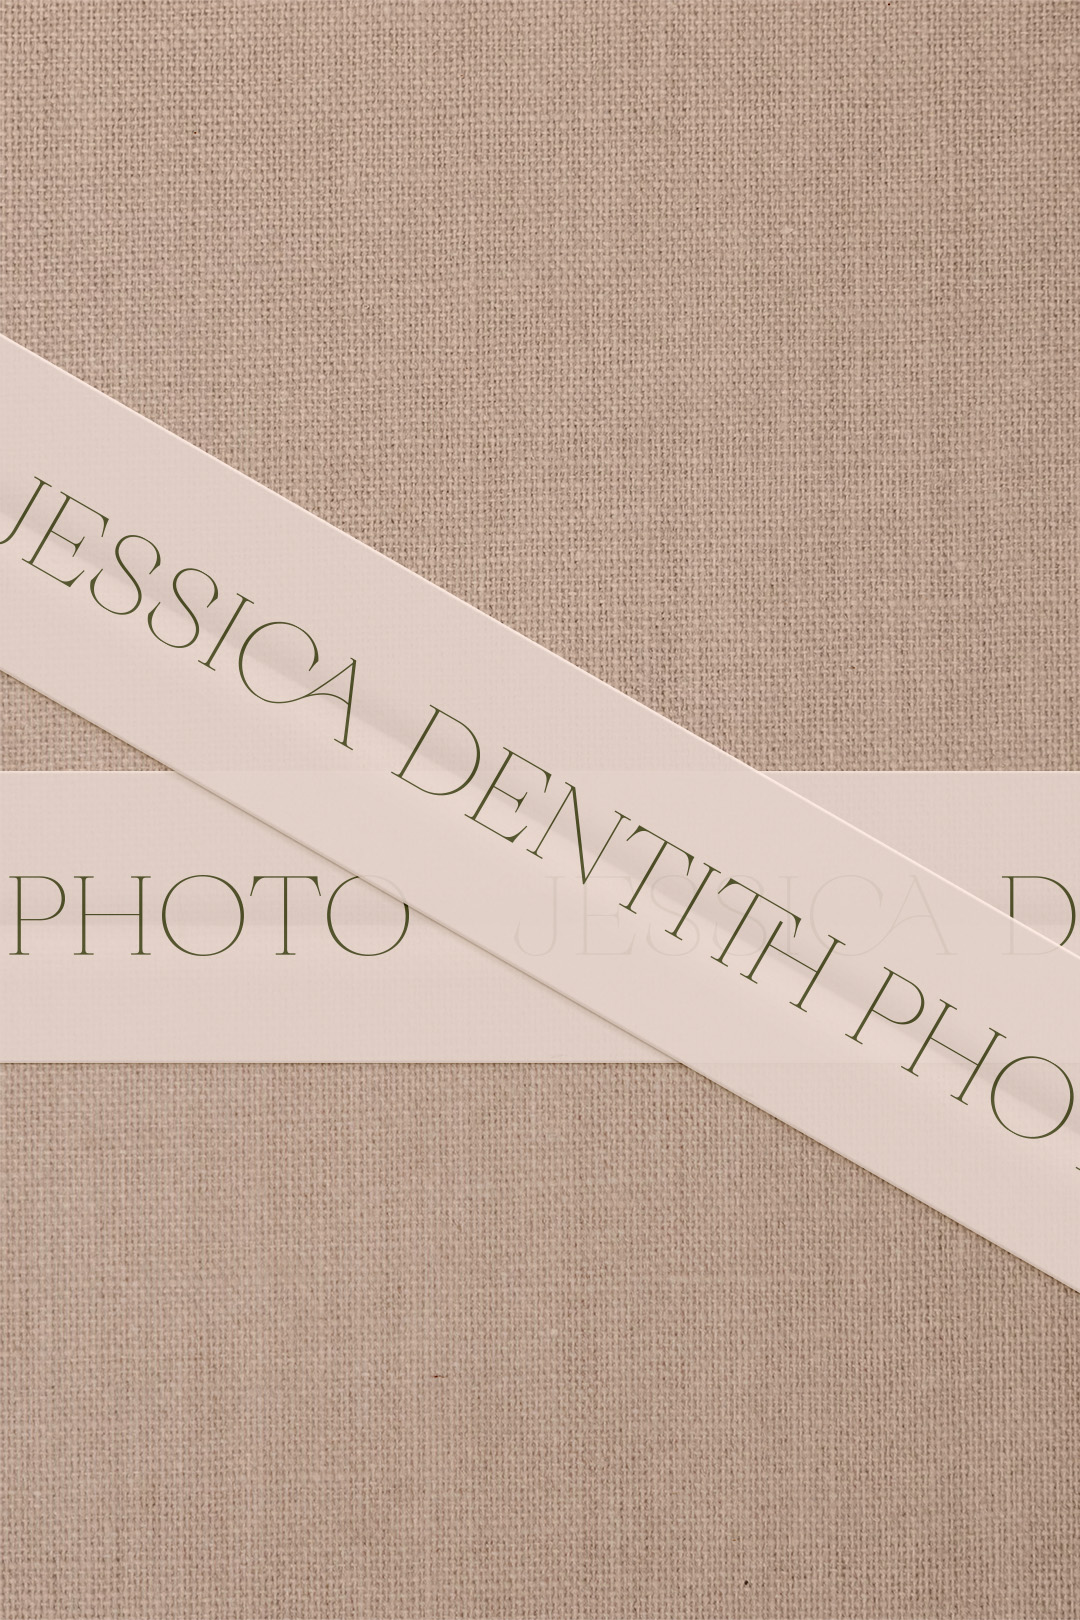 Modern Brand Design for Photographer Jessica Dentith